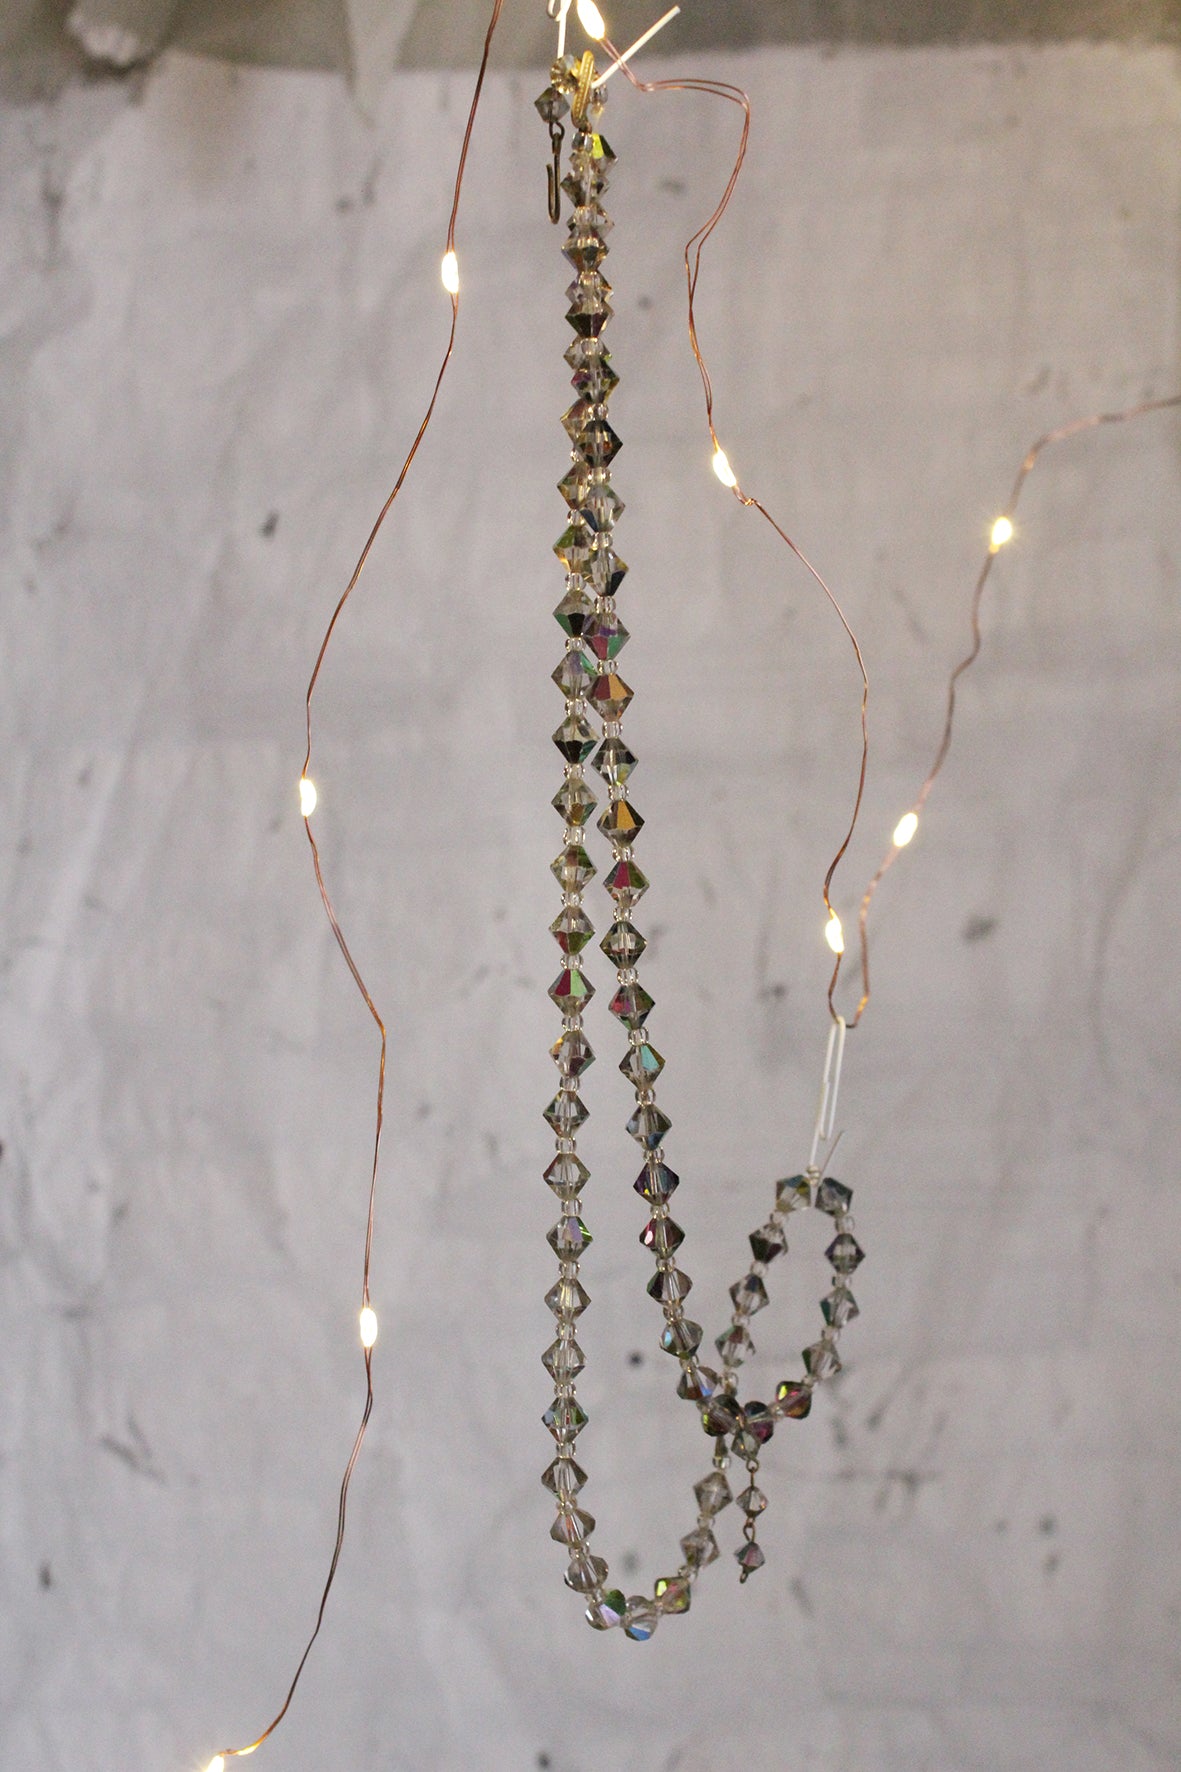 Old Necklace/Garland Wreath Decoration - Angel -  5